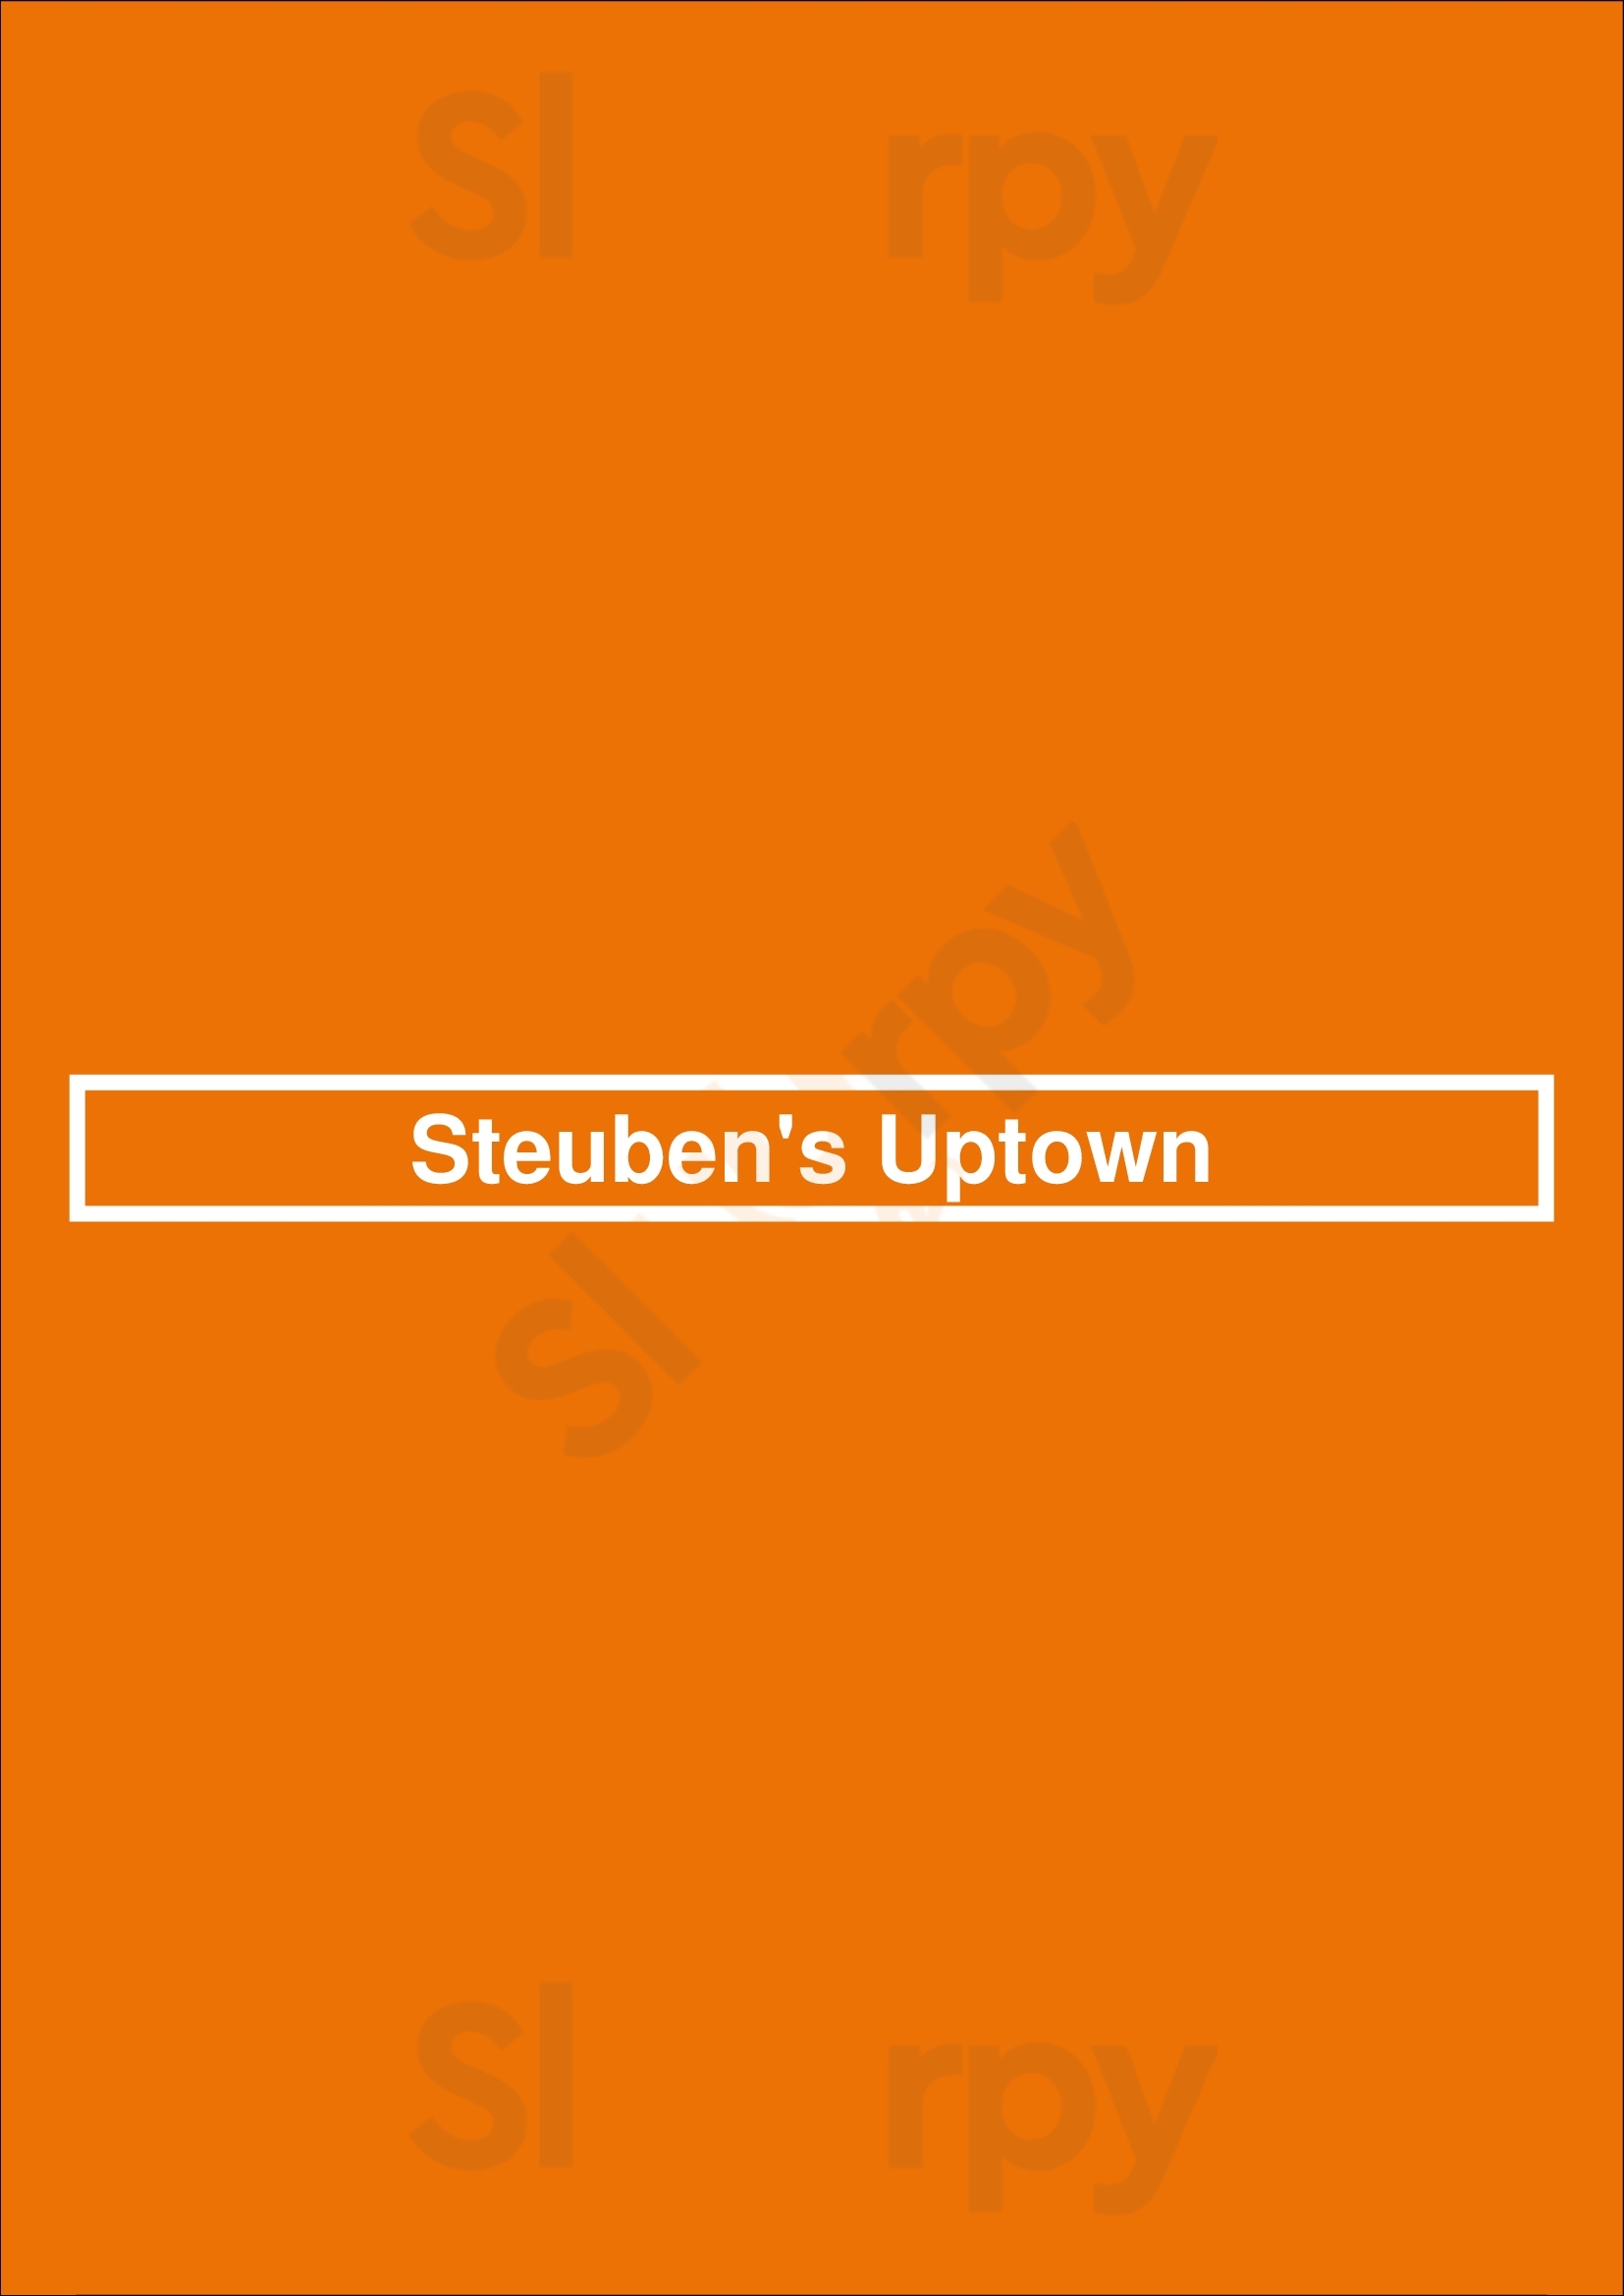 Steuben's Uptown Denver Menu - 1